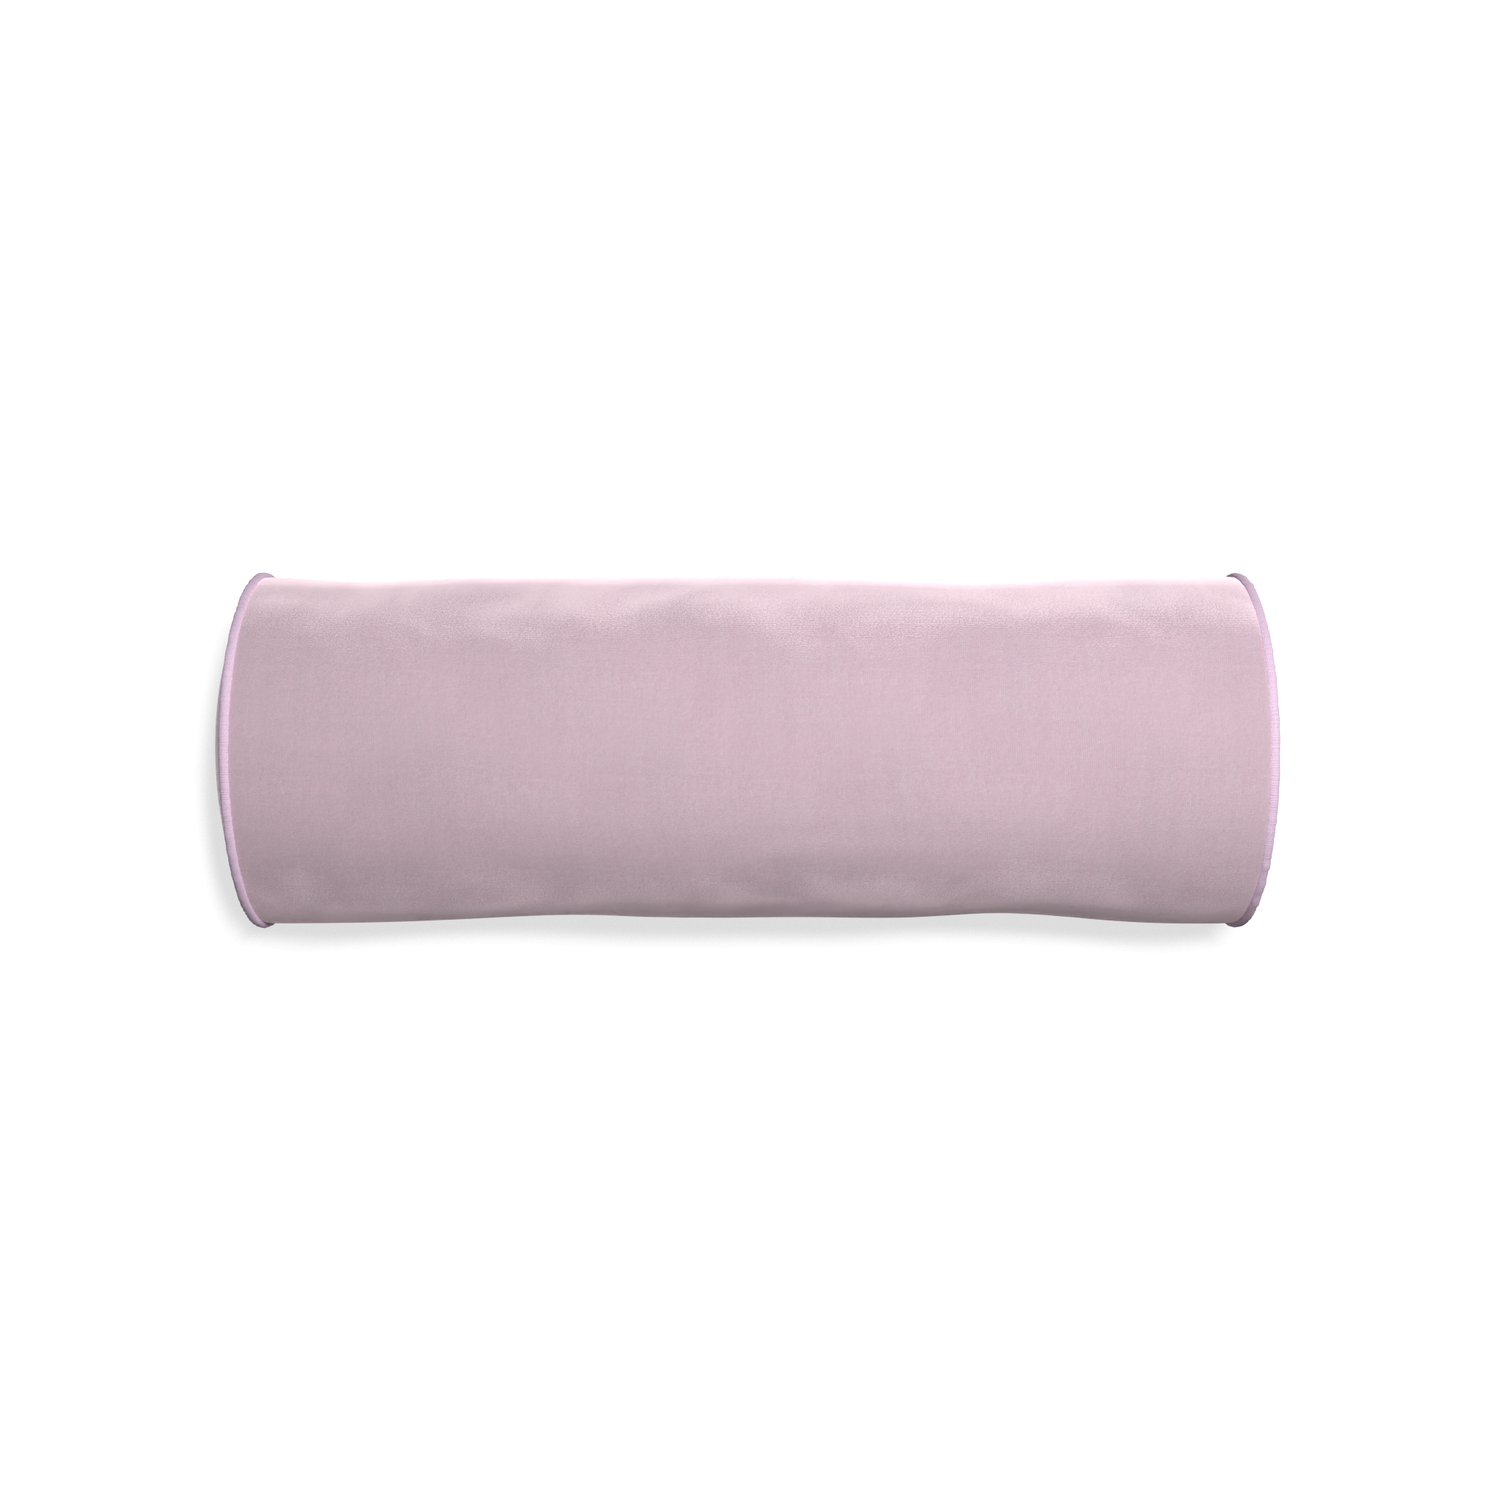 Bolster lilac velvet custom pillow with l piping on white background